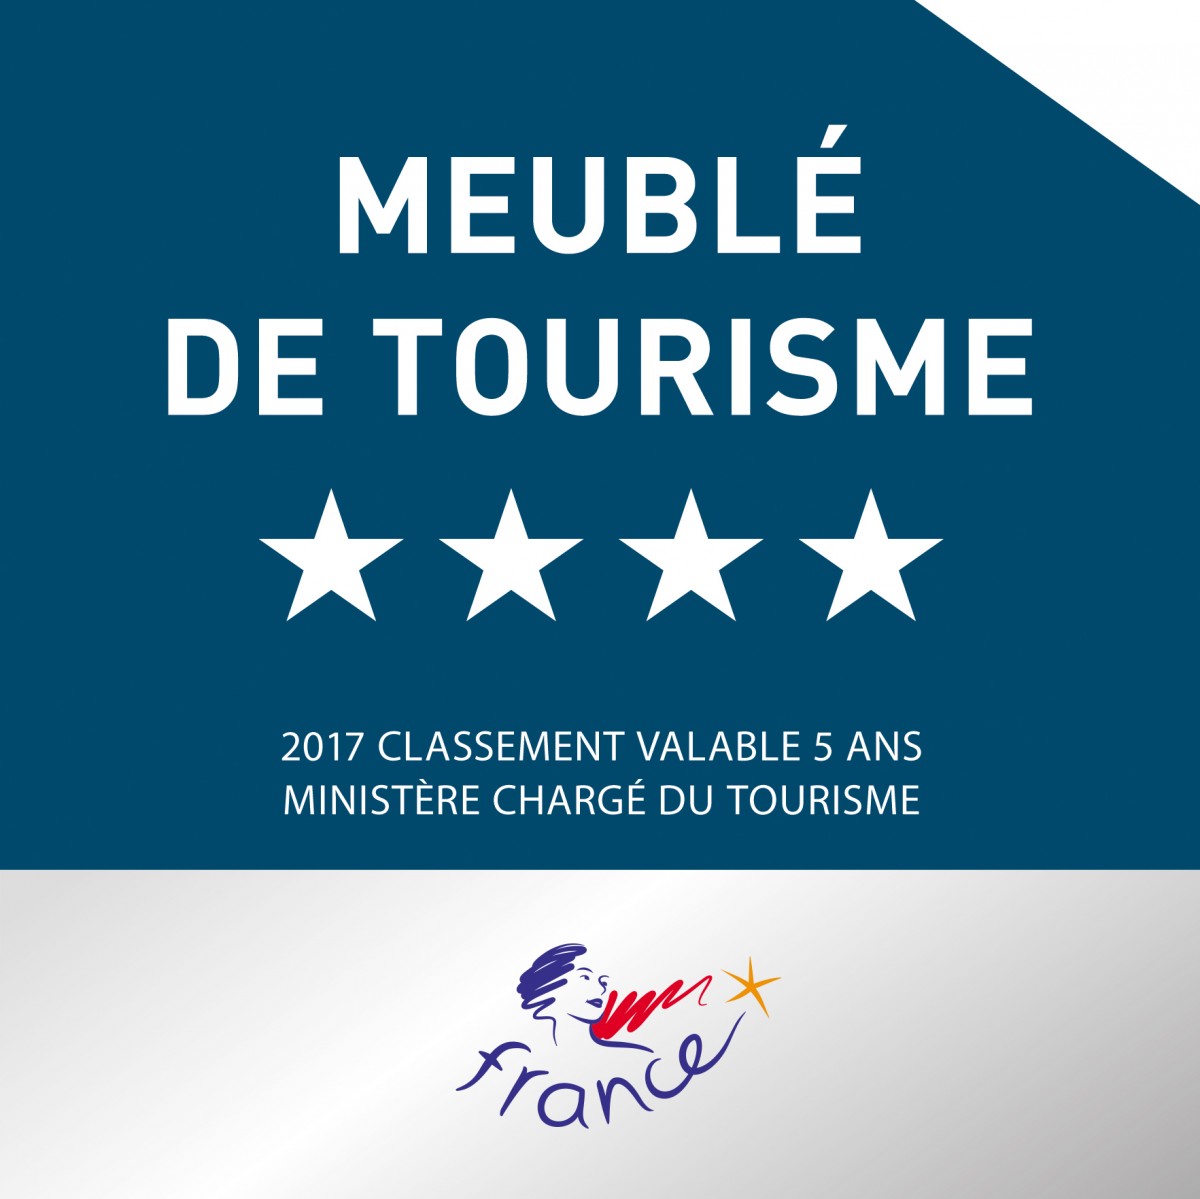 plaque-meuble-tourisme-4-2017-13873